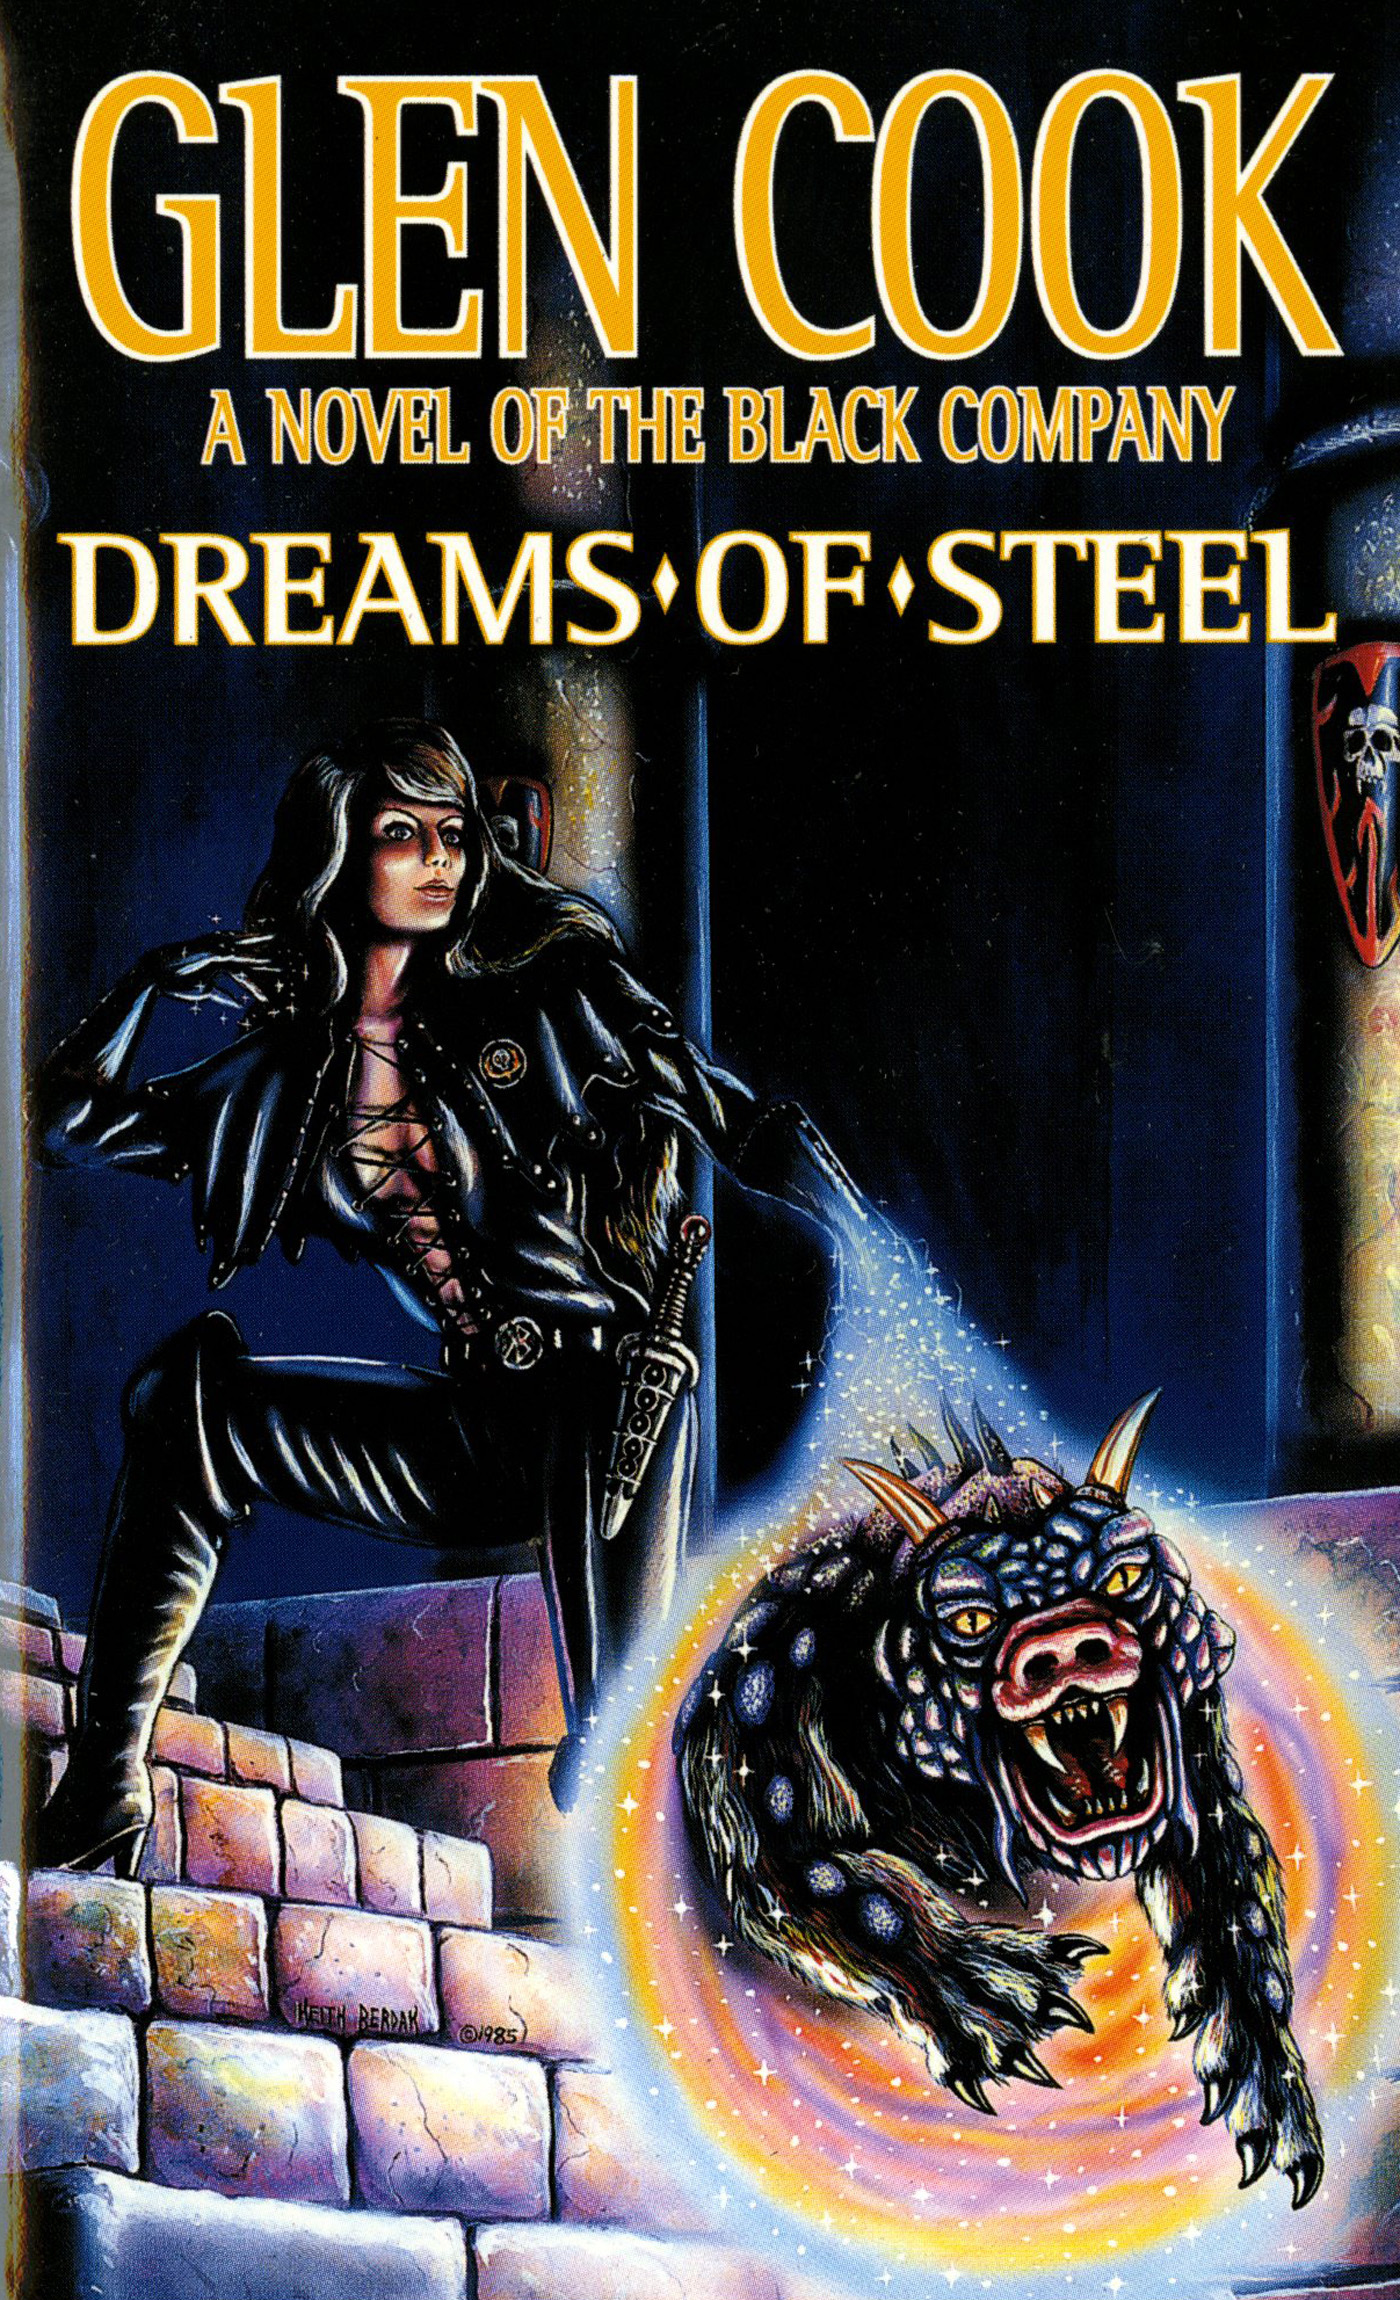 Dreams of Steel by Glen Cook